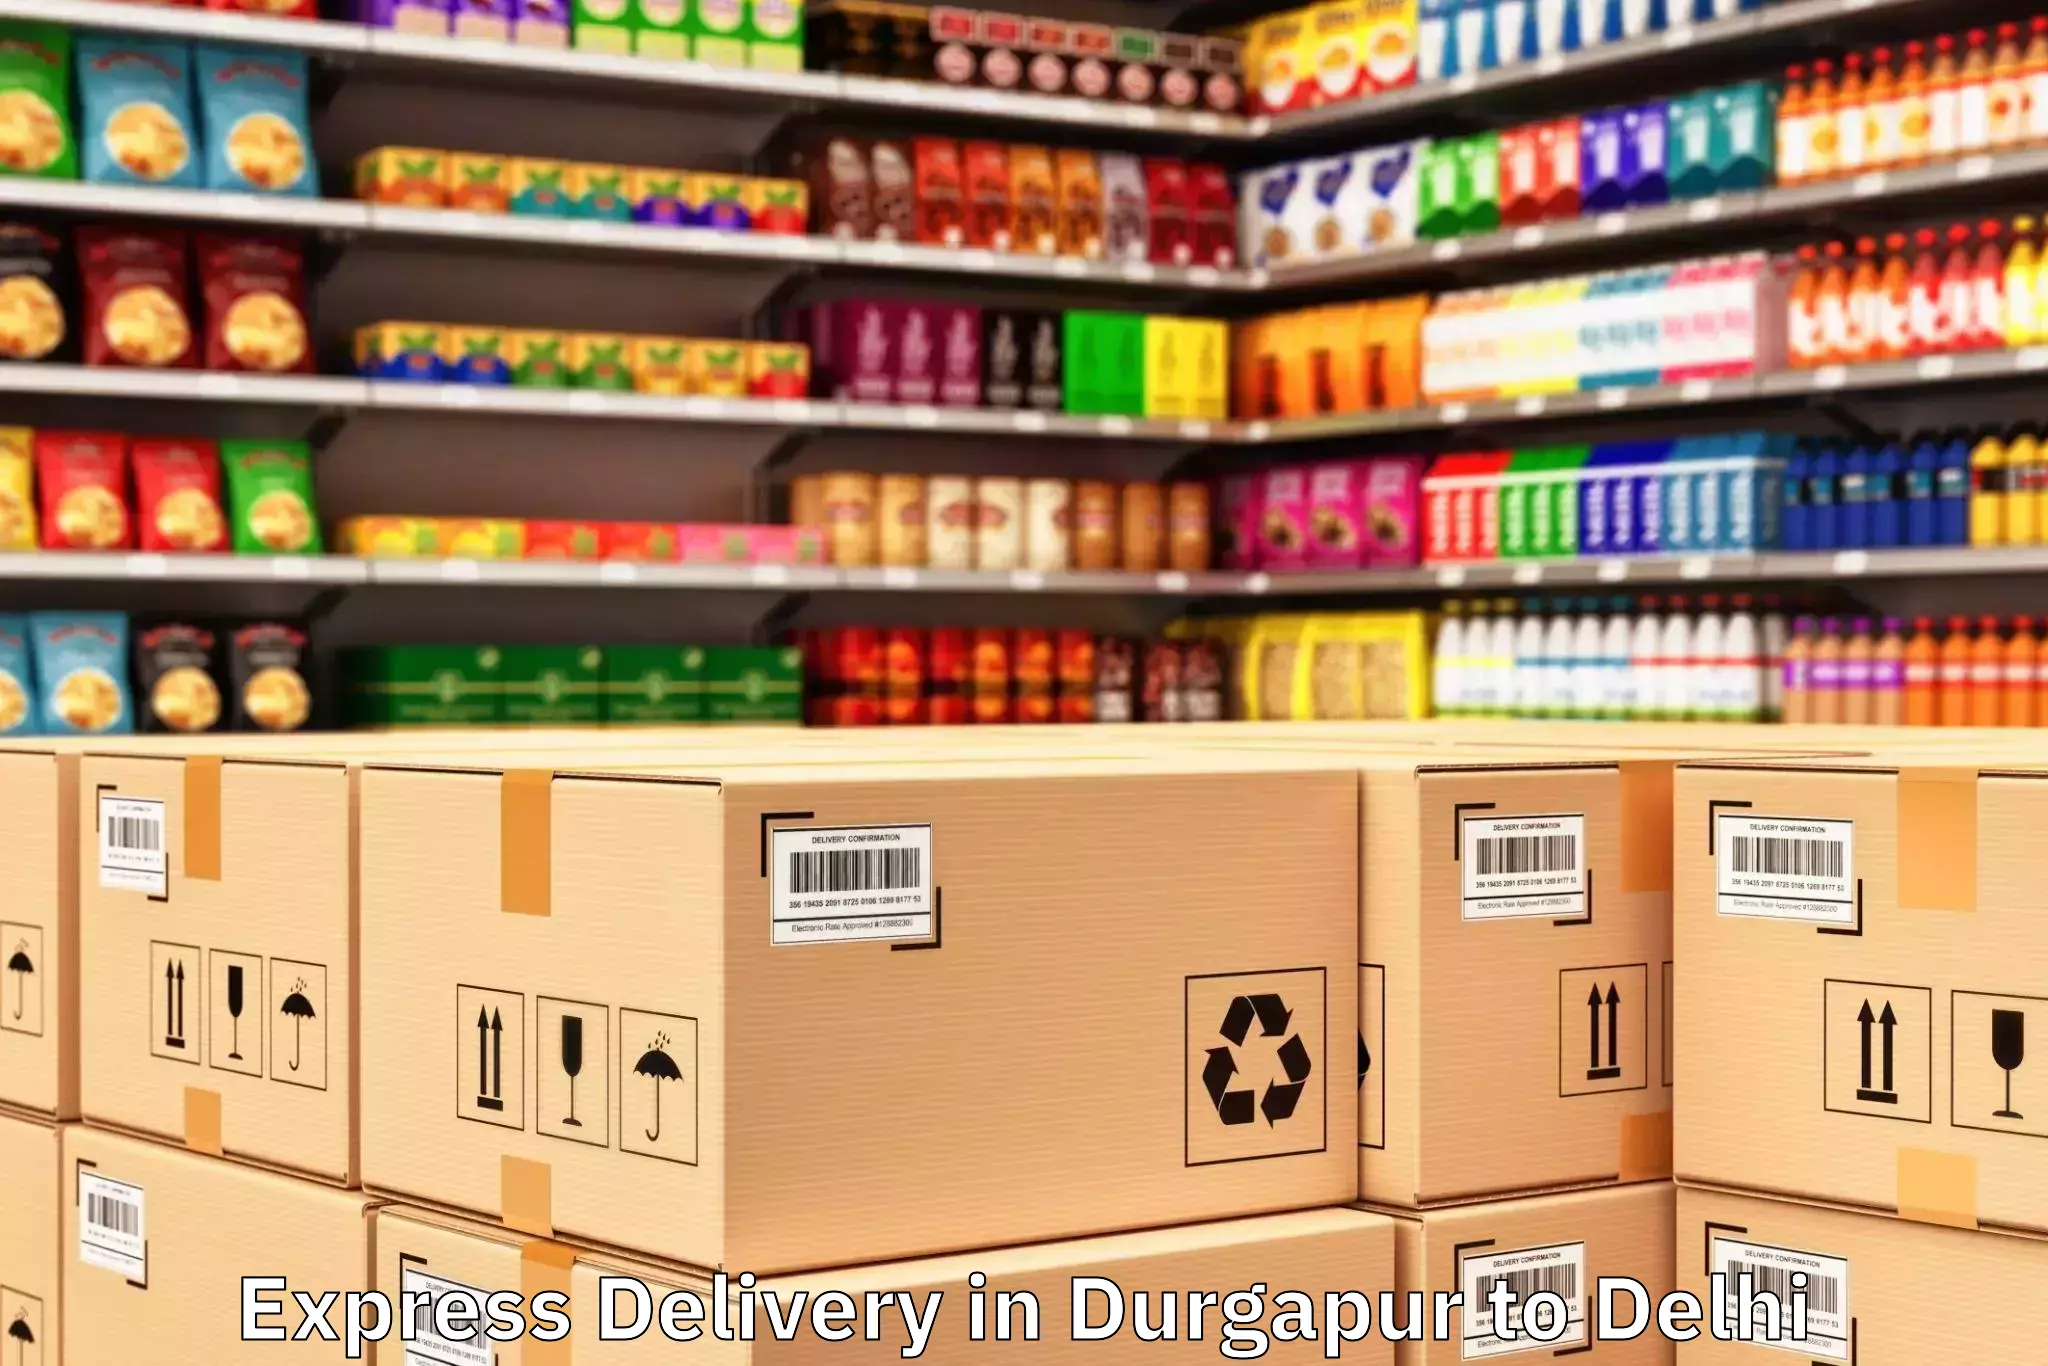 Efficient Durgapur to Delhi Express Delivery